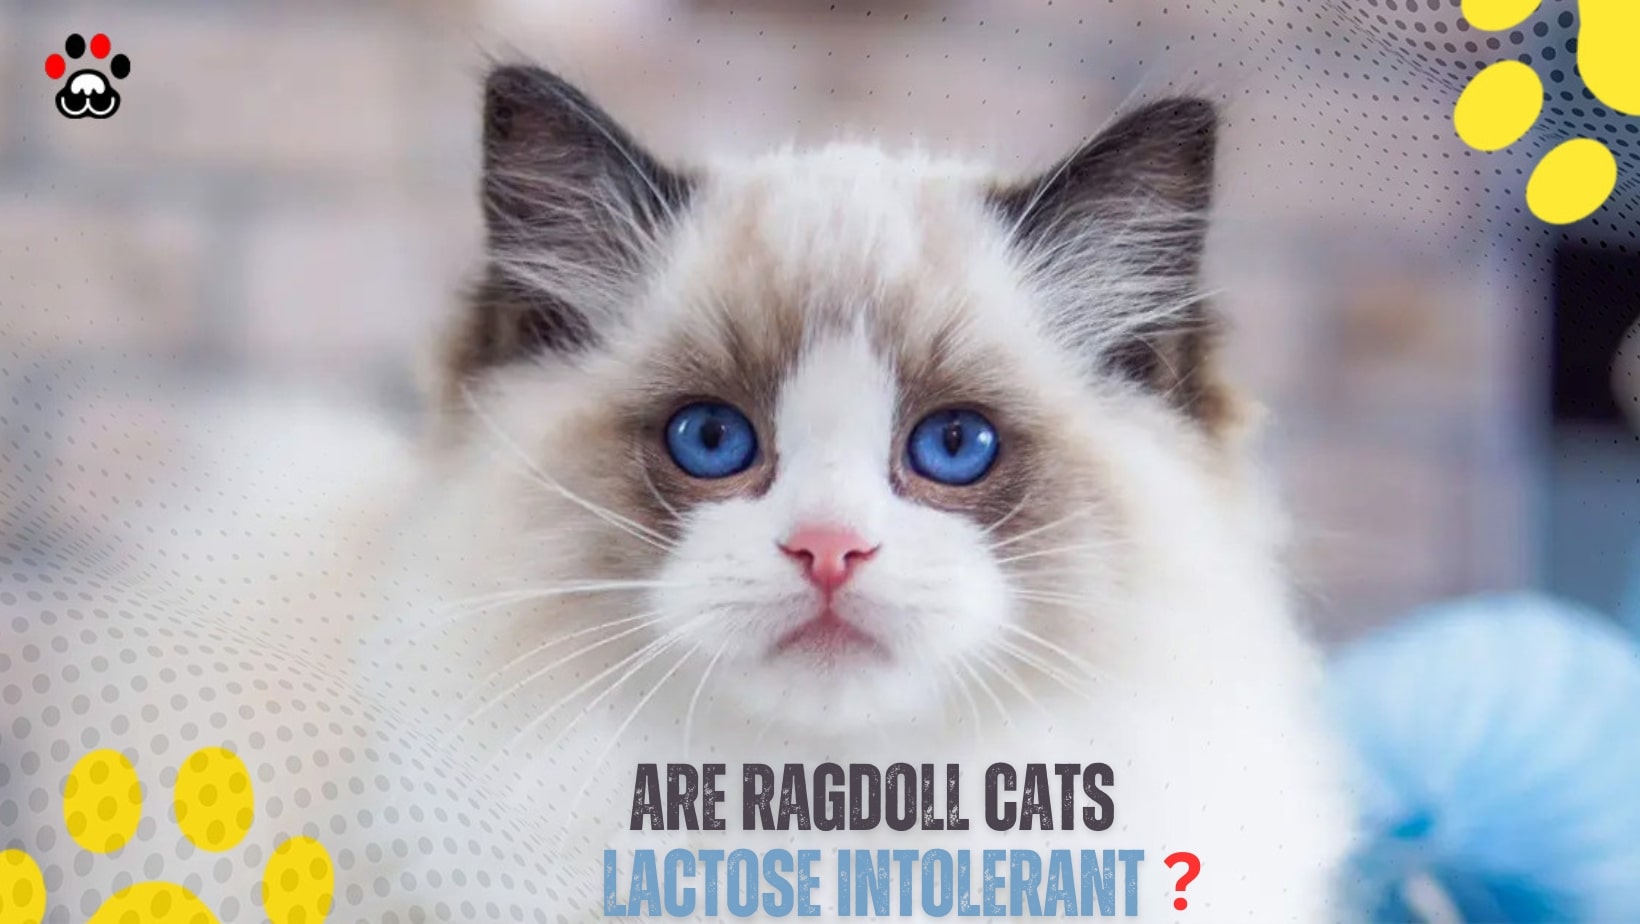 Are Ragdoll cats lactose intolerant